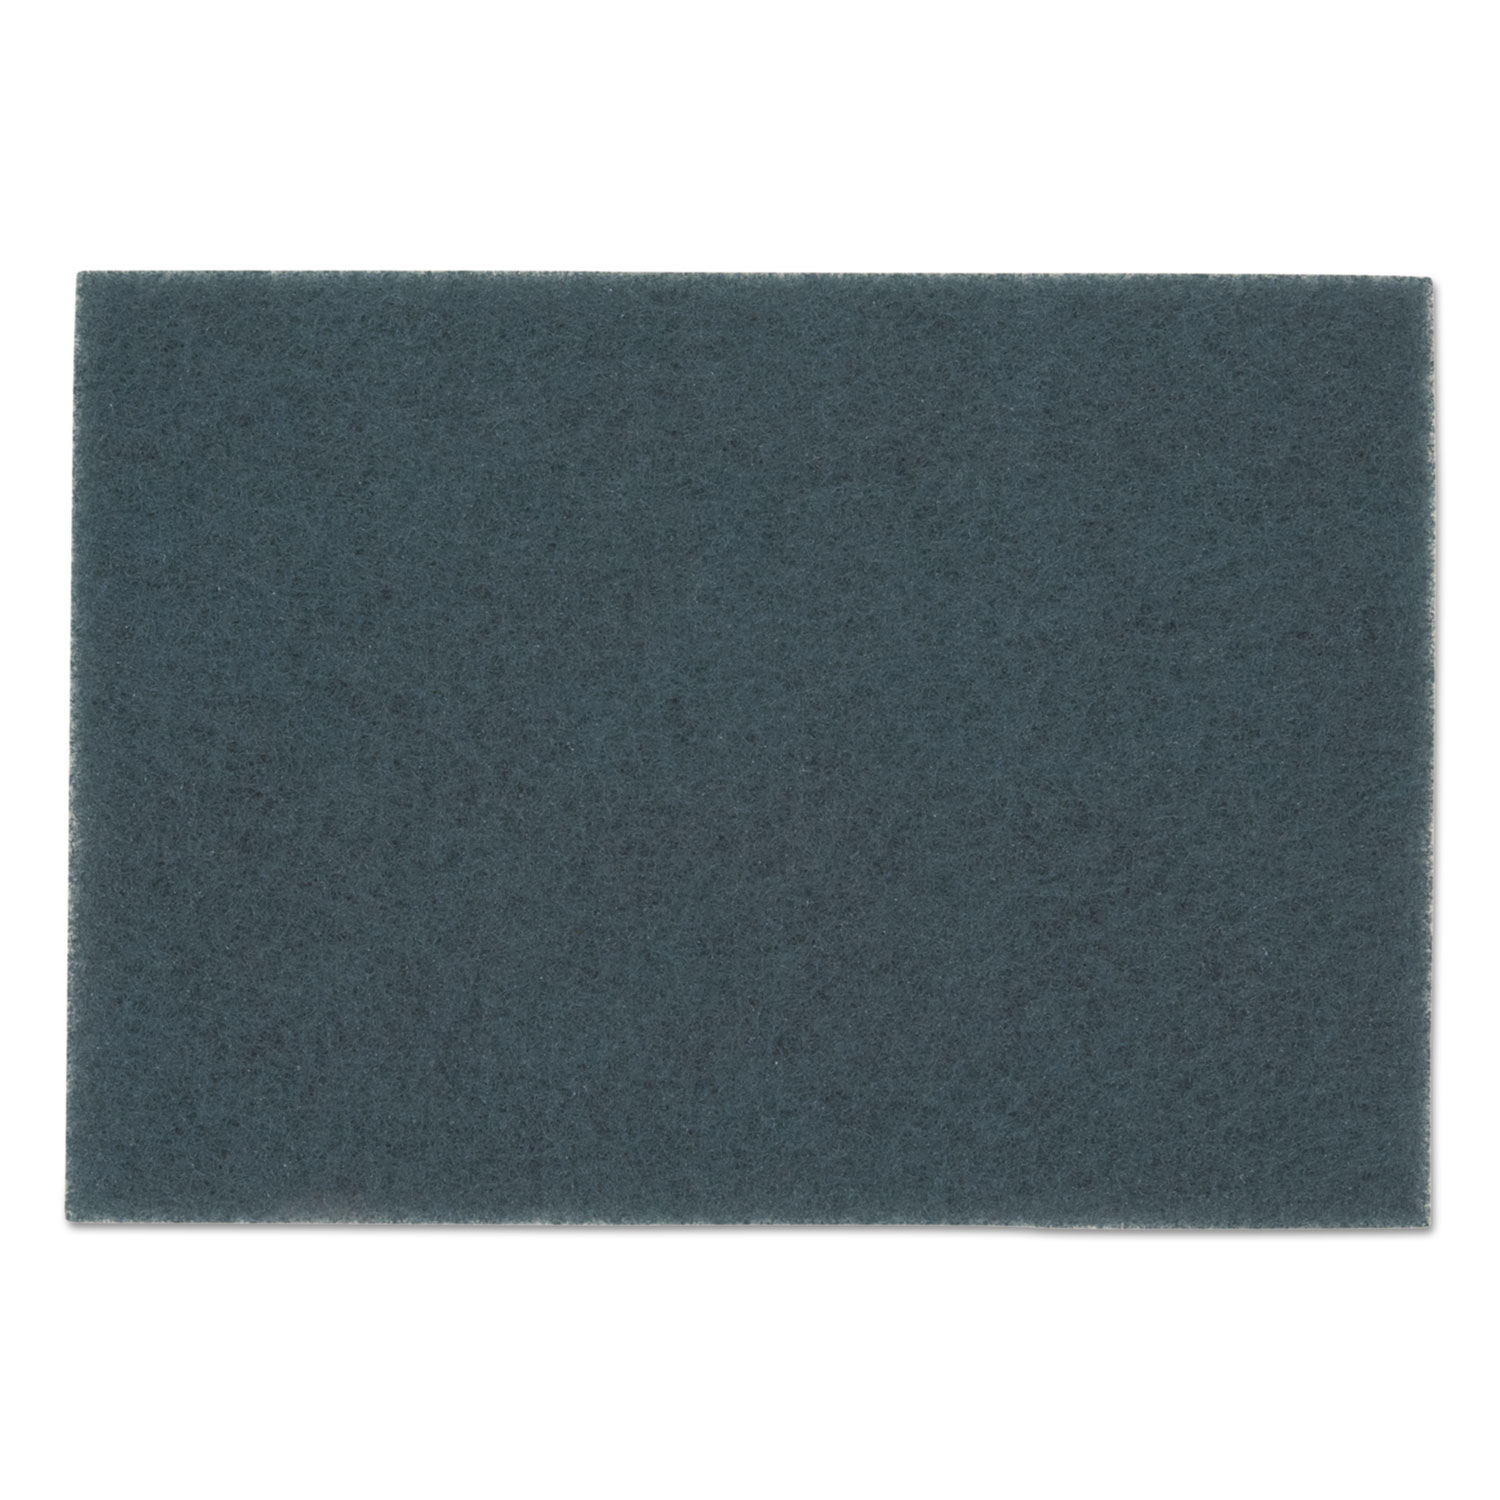  3M 5300 Blue Cleaner Pads 5300, 28 x 14, Blue, 10/Carton (MMM530028X14) 